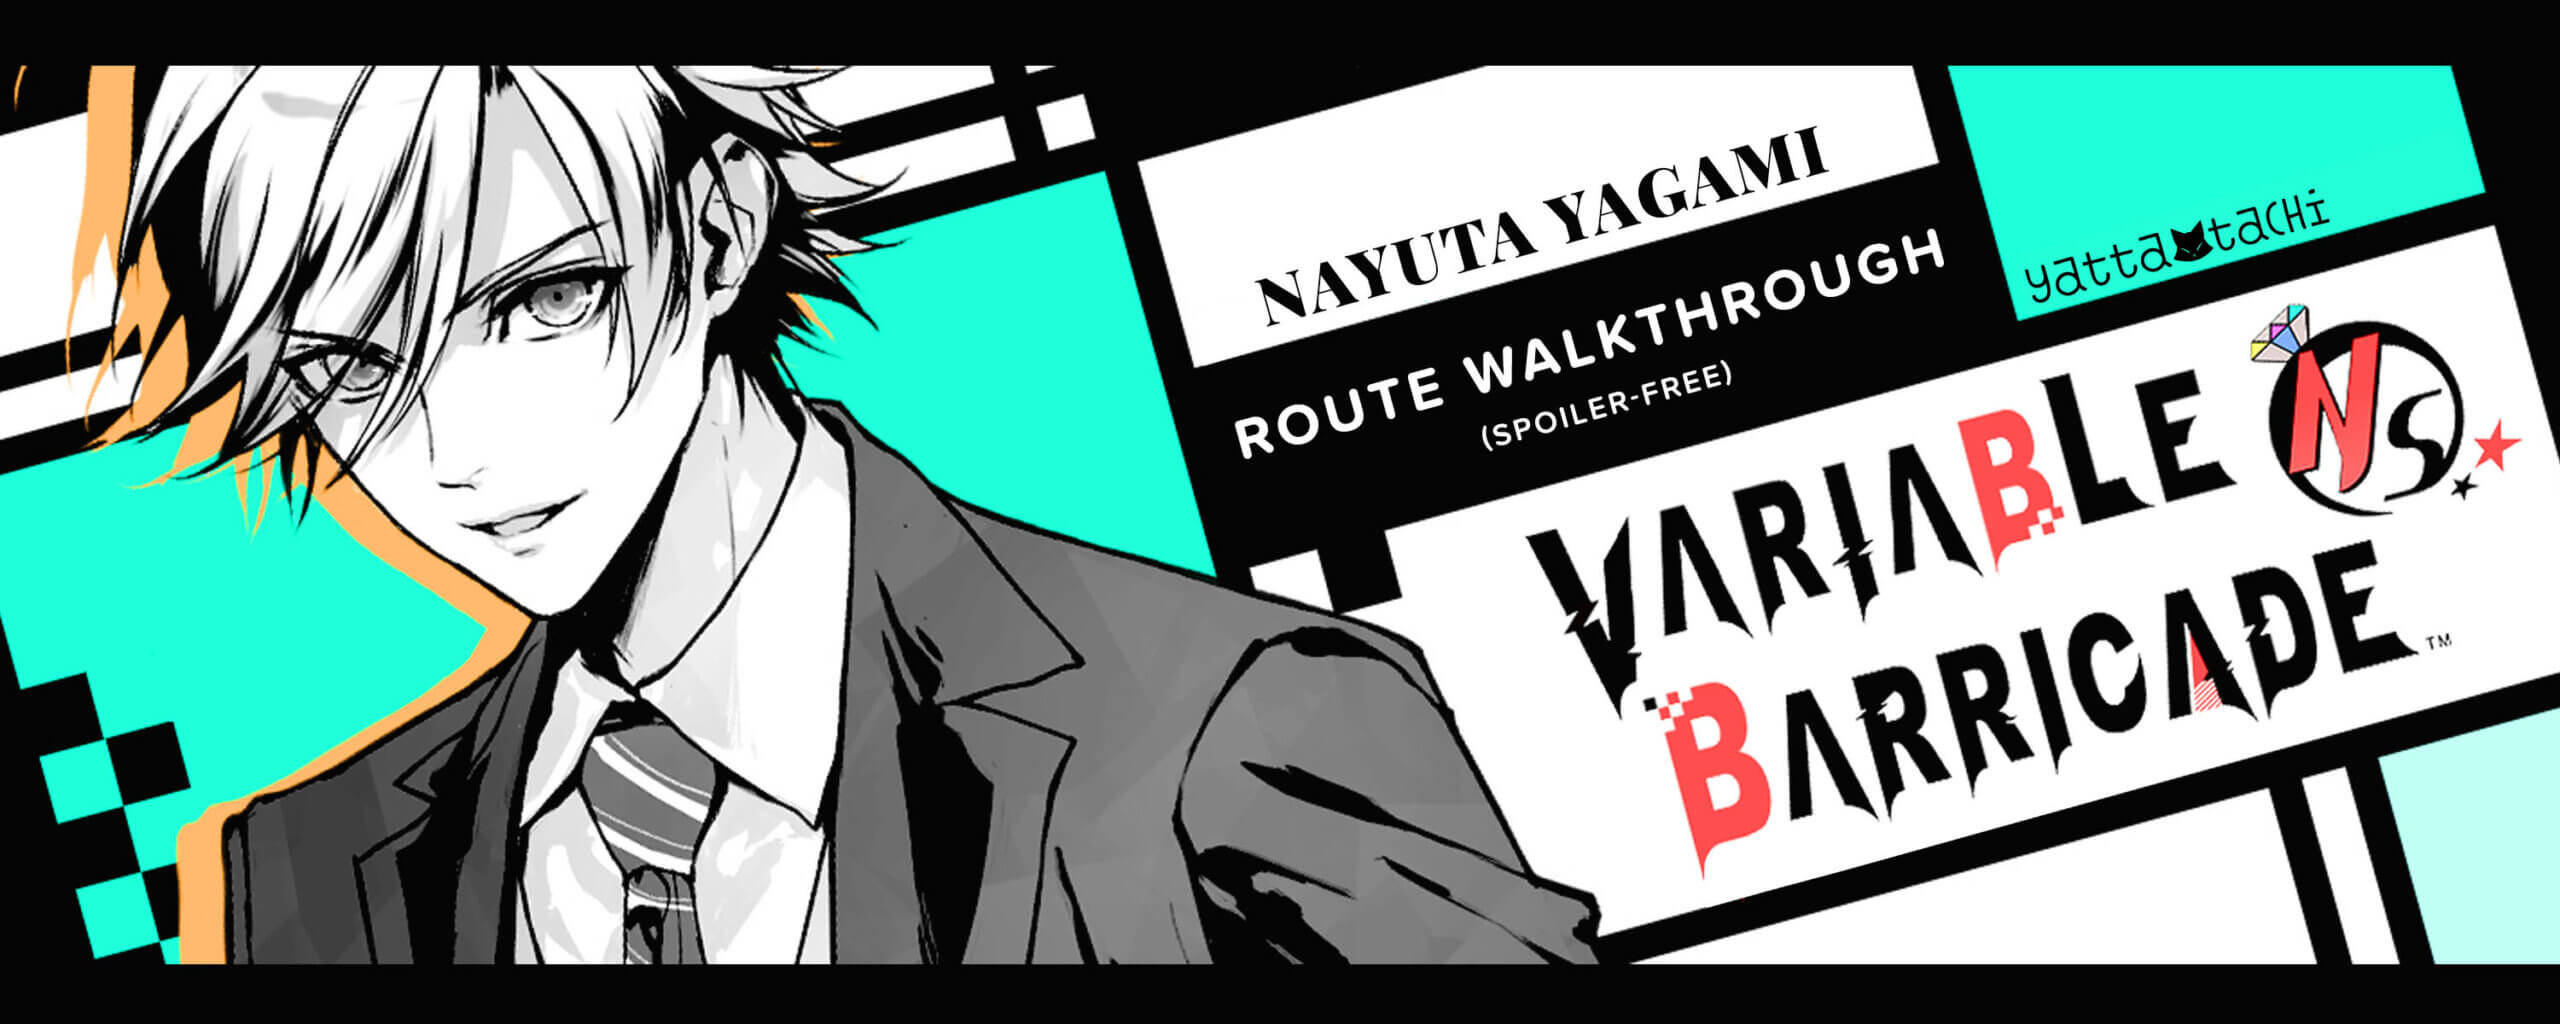 Variable Barricade - Nayuta Yagami Walkthrough (Spoiler-Free) | Yatta-Tachi